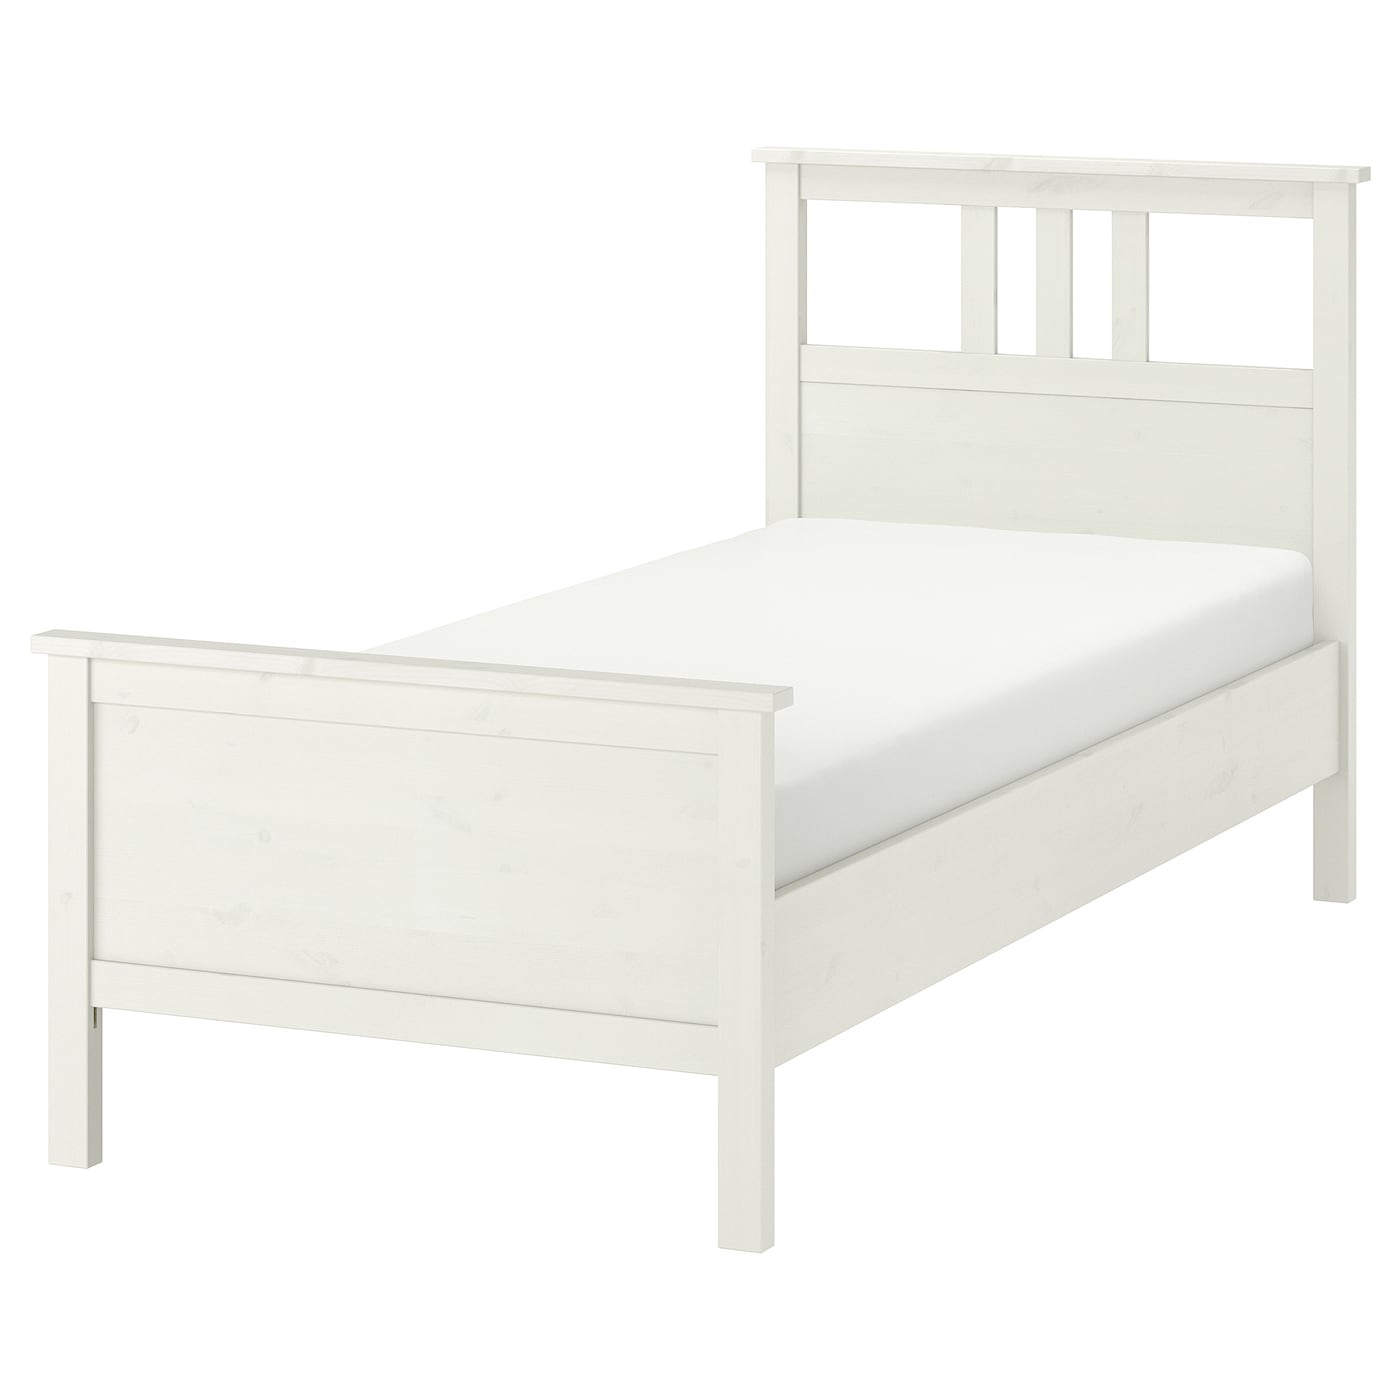 Каркас кровати - IKEA HEMNES, 200х90 см, белый, ХЕМНЭС ИКЕА